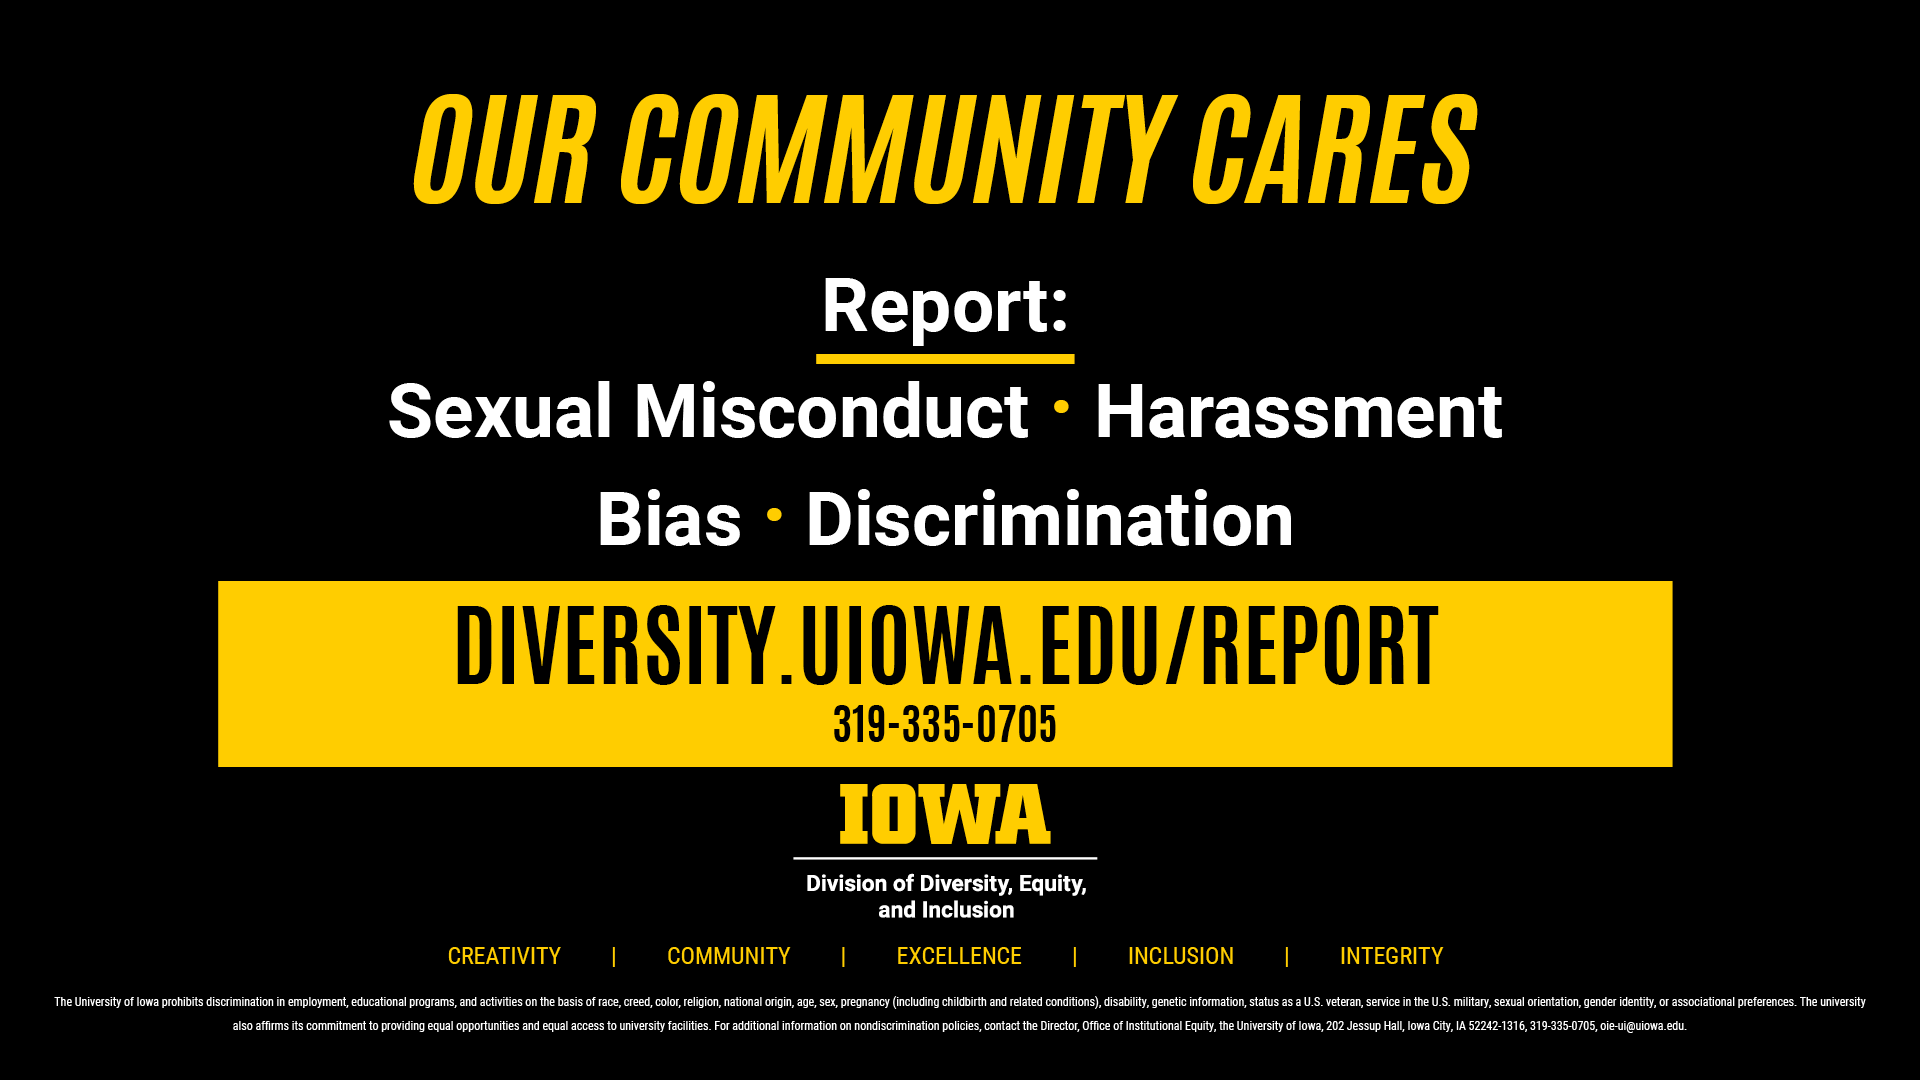 Our Community Cares – Diversity.uiowa.edu/report